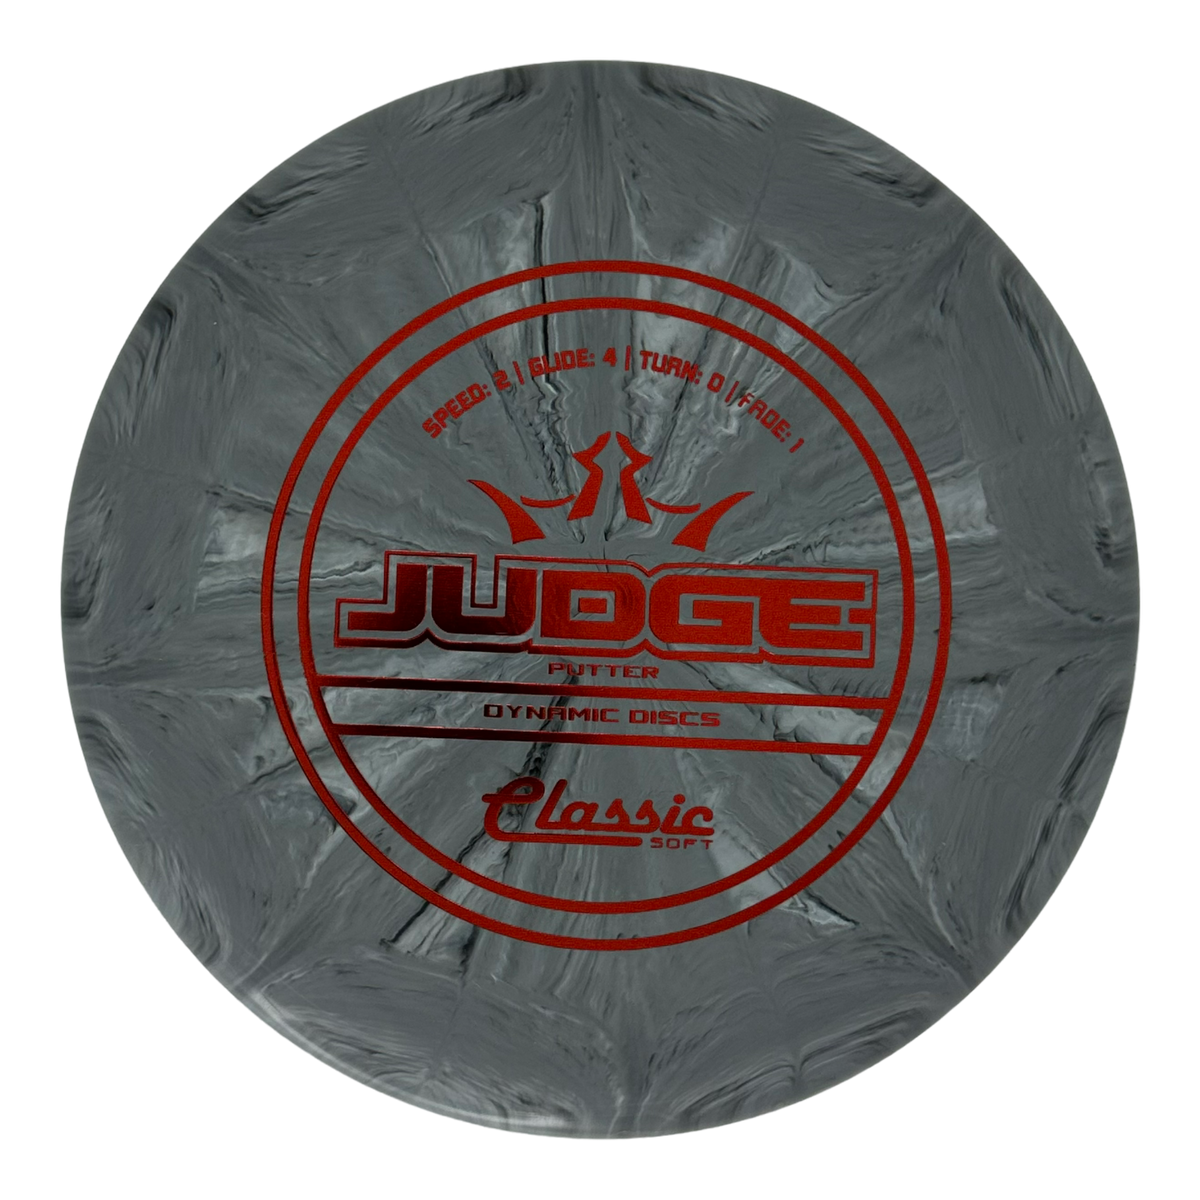 Dynamic Discs Classic Soft Burst Judge